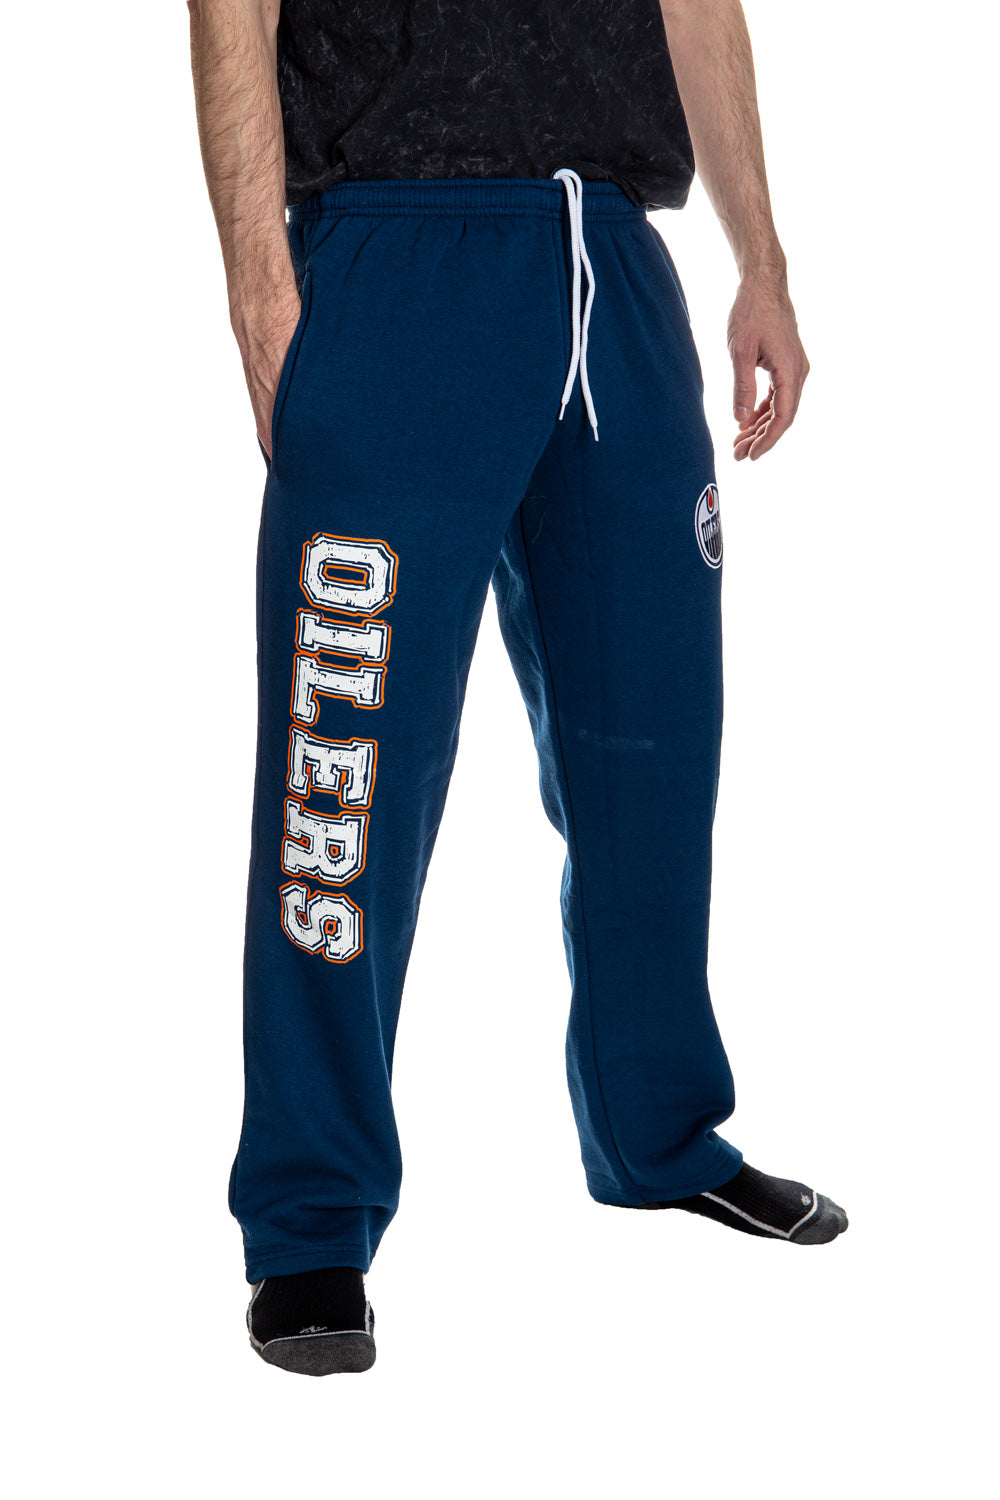 Edmonton Oilers Premium Fleece Sweatpants Side View of Oilers Print.